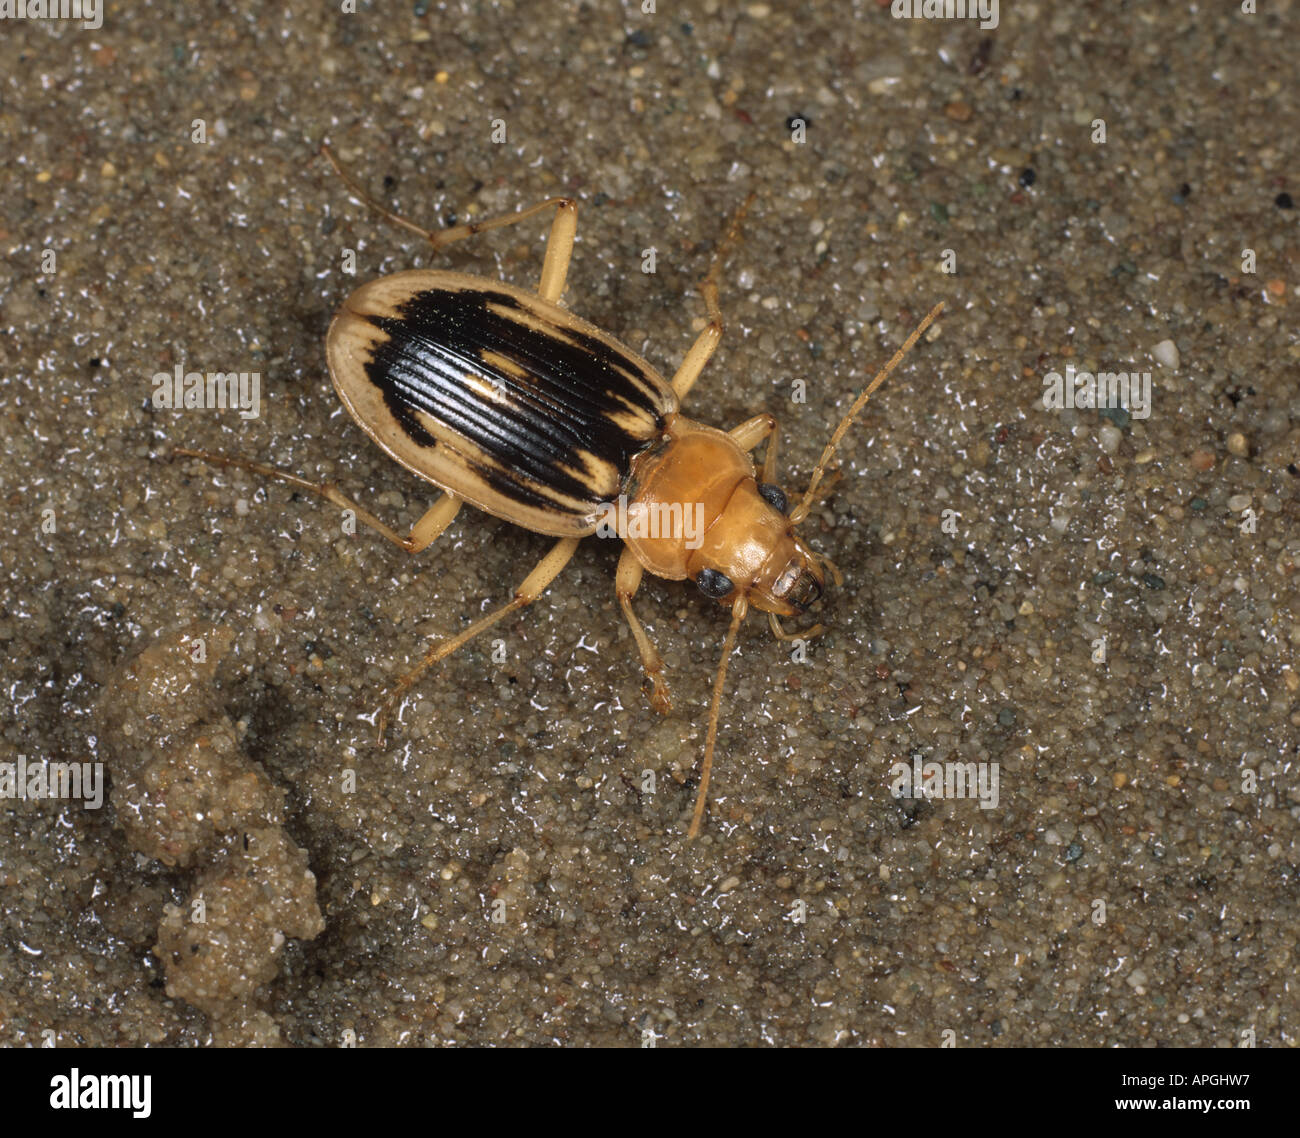 A carabid beetle Nebria complanata adult on sand Stock Photo